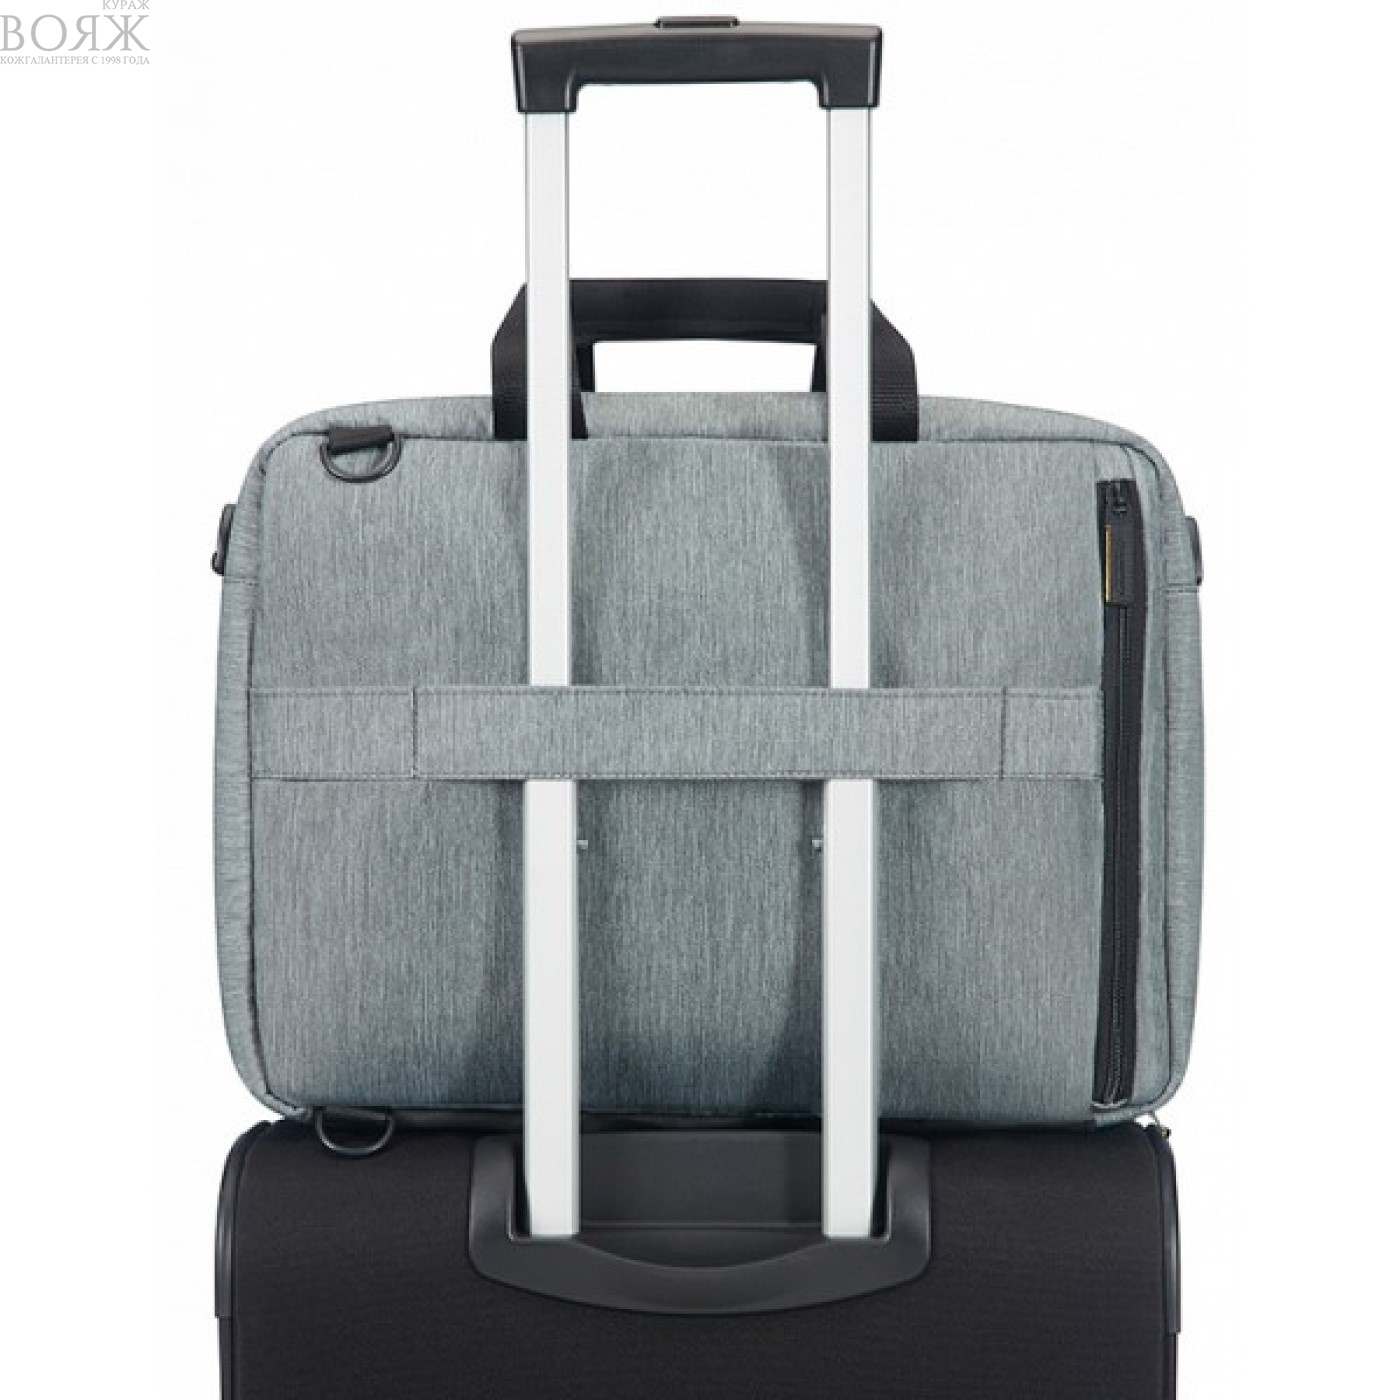 Деловая сумка-рюкзак/ПК American Tourister